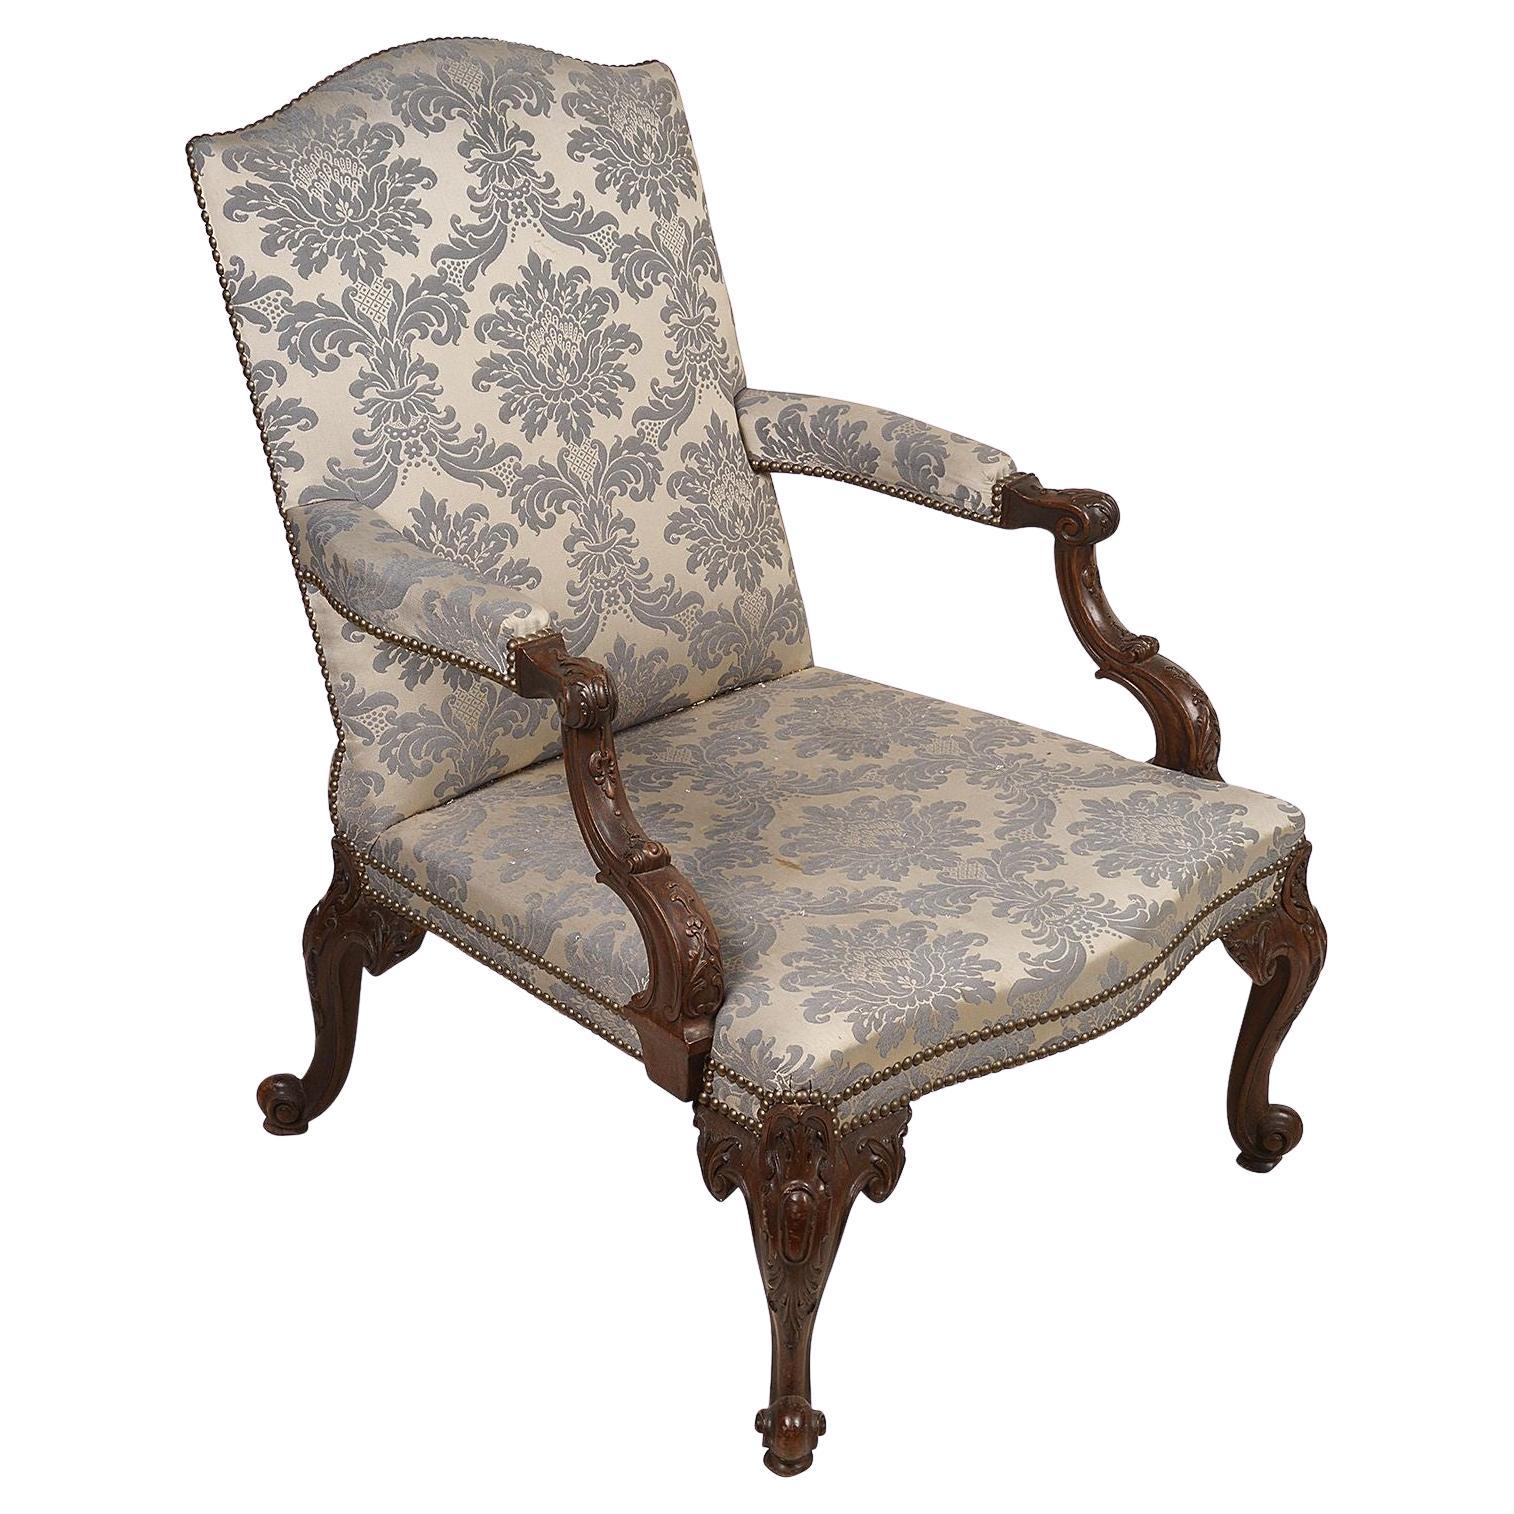 George 11 style Mahogany Gainsborough arm chair